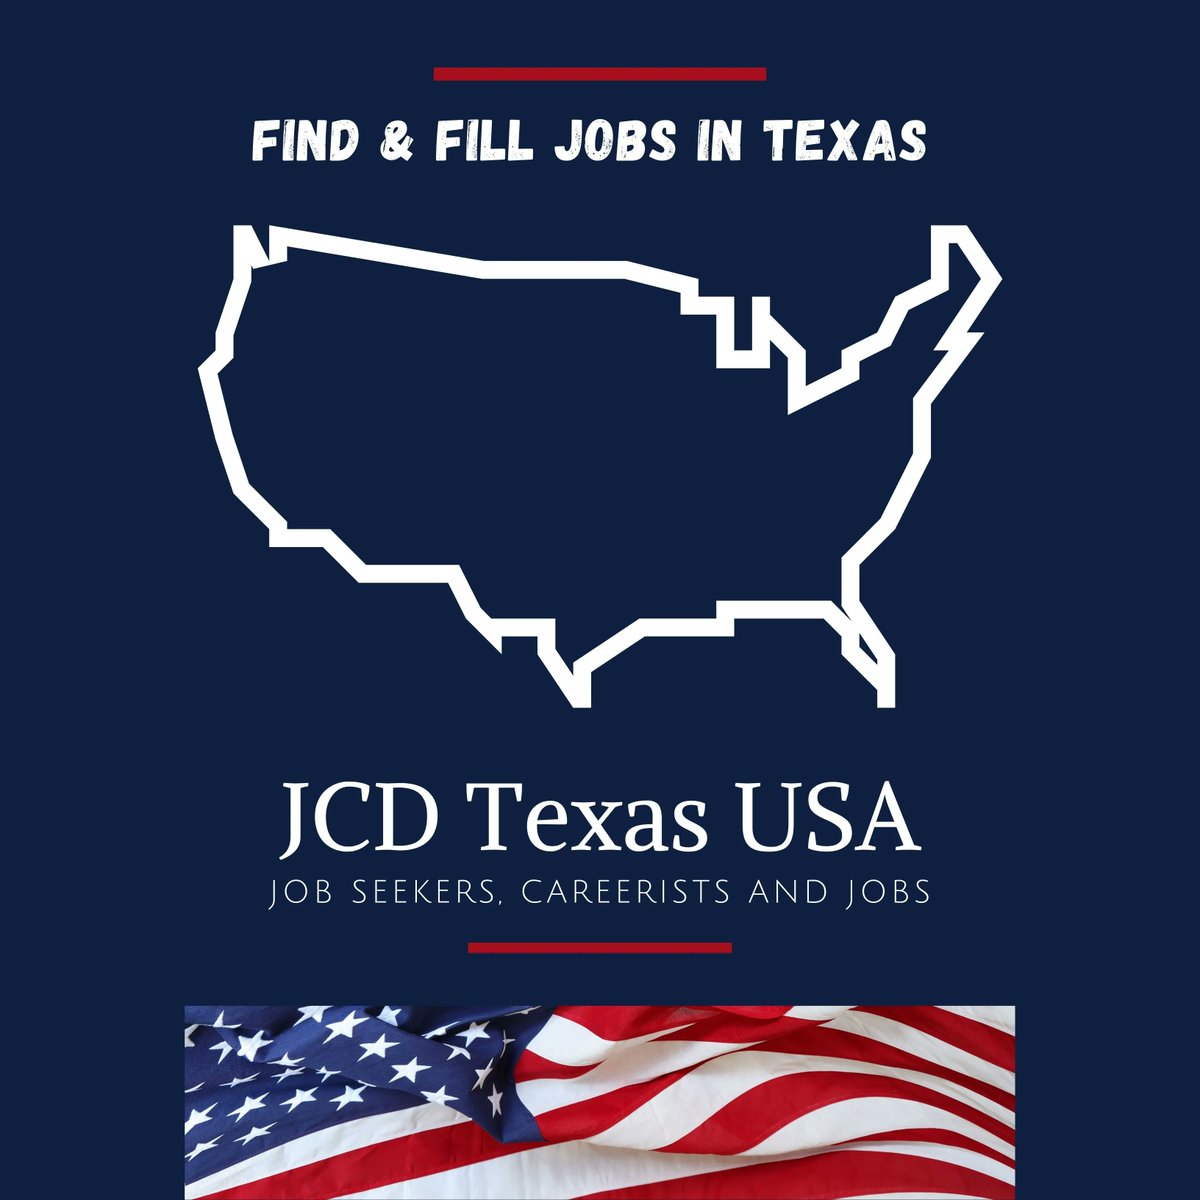 Looking for #jobs or #hiring #Talent in #Texas? GO HERE buff.ly/3HVTje6

#houstontexas #austintexas #sanantoniotexas #dallastexas #fortworthtexas #elpasotexas #mckinneytexas #planotexas #katytexas #thewoodlandstexas #houstonlife #austinlife #unitedstates #linkedin #usa